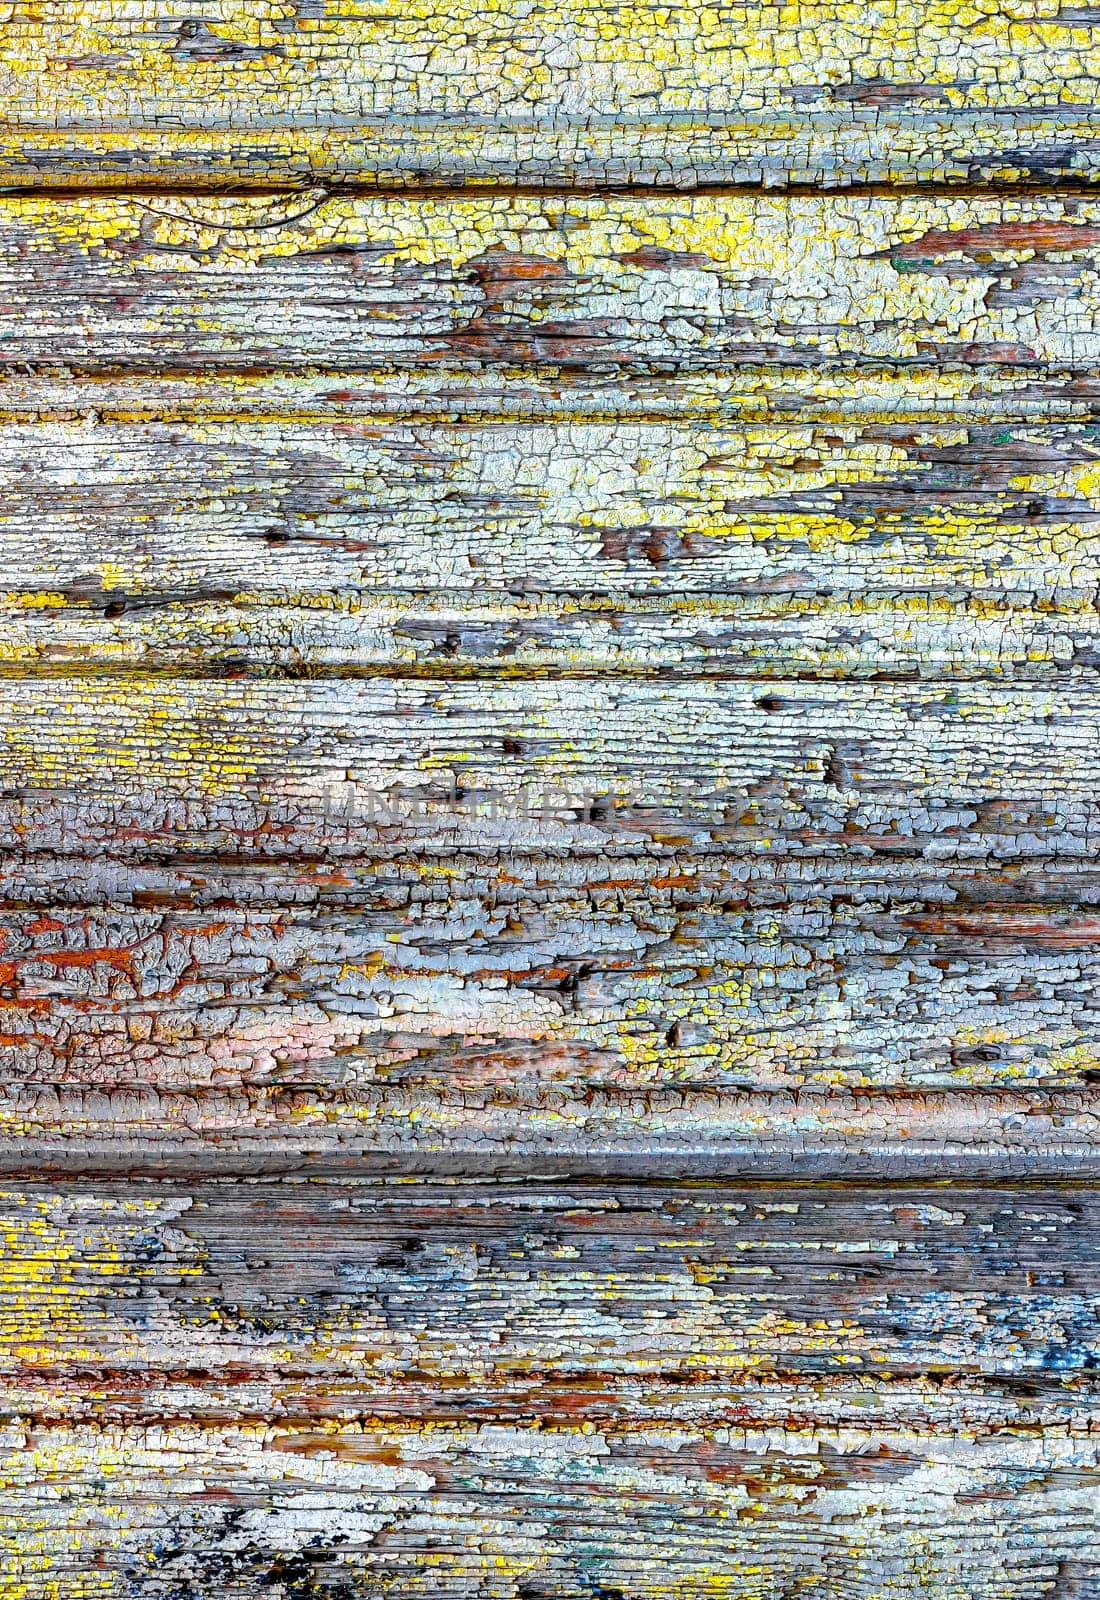 Old wood background by germanopoli